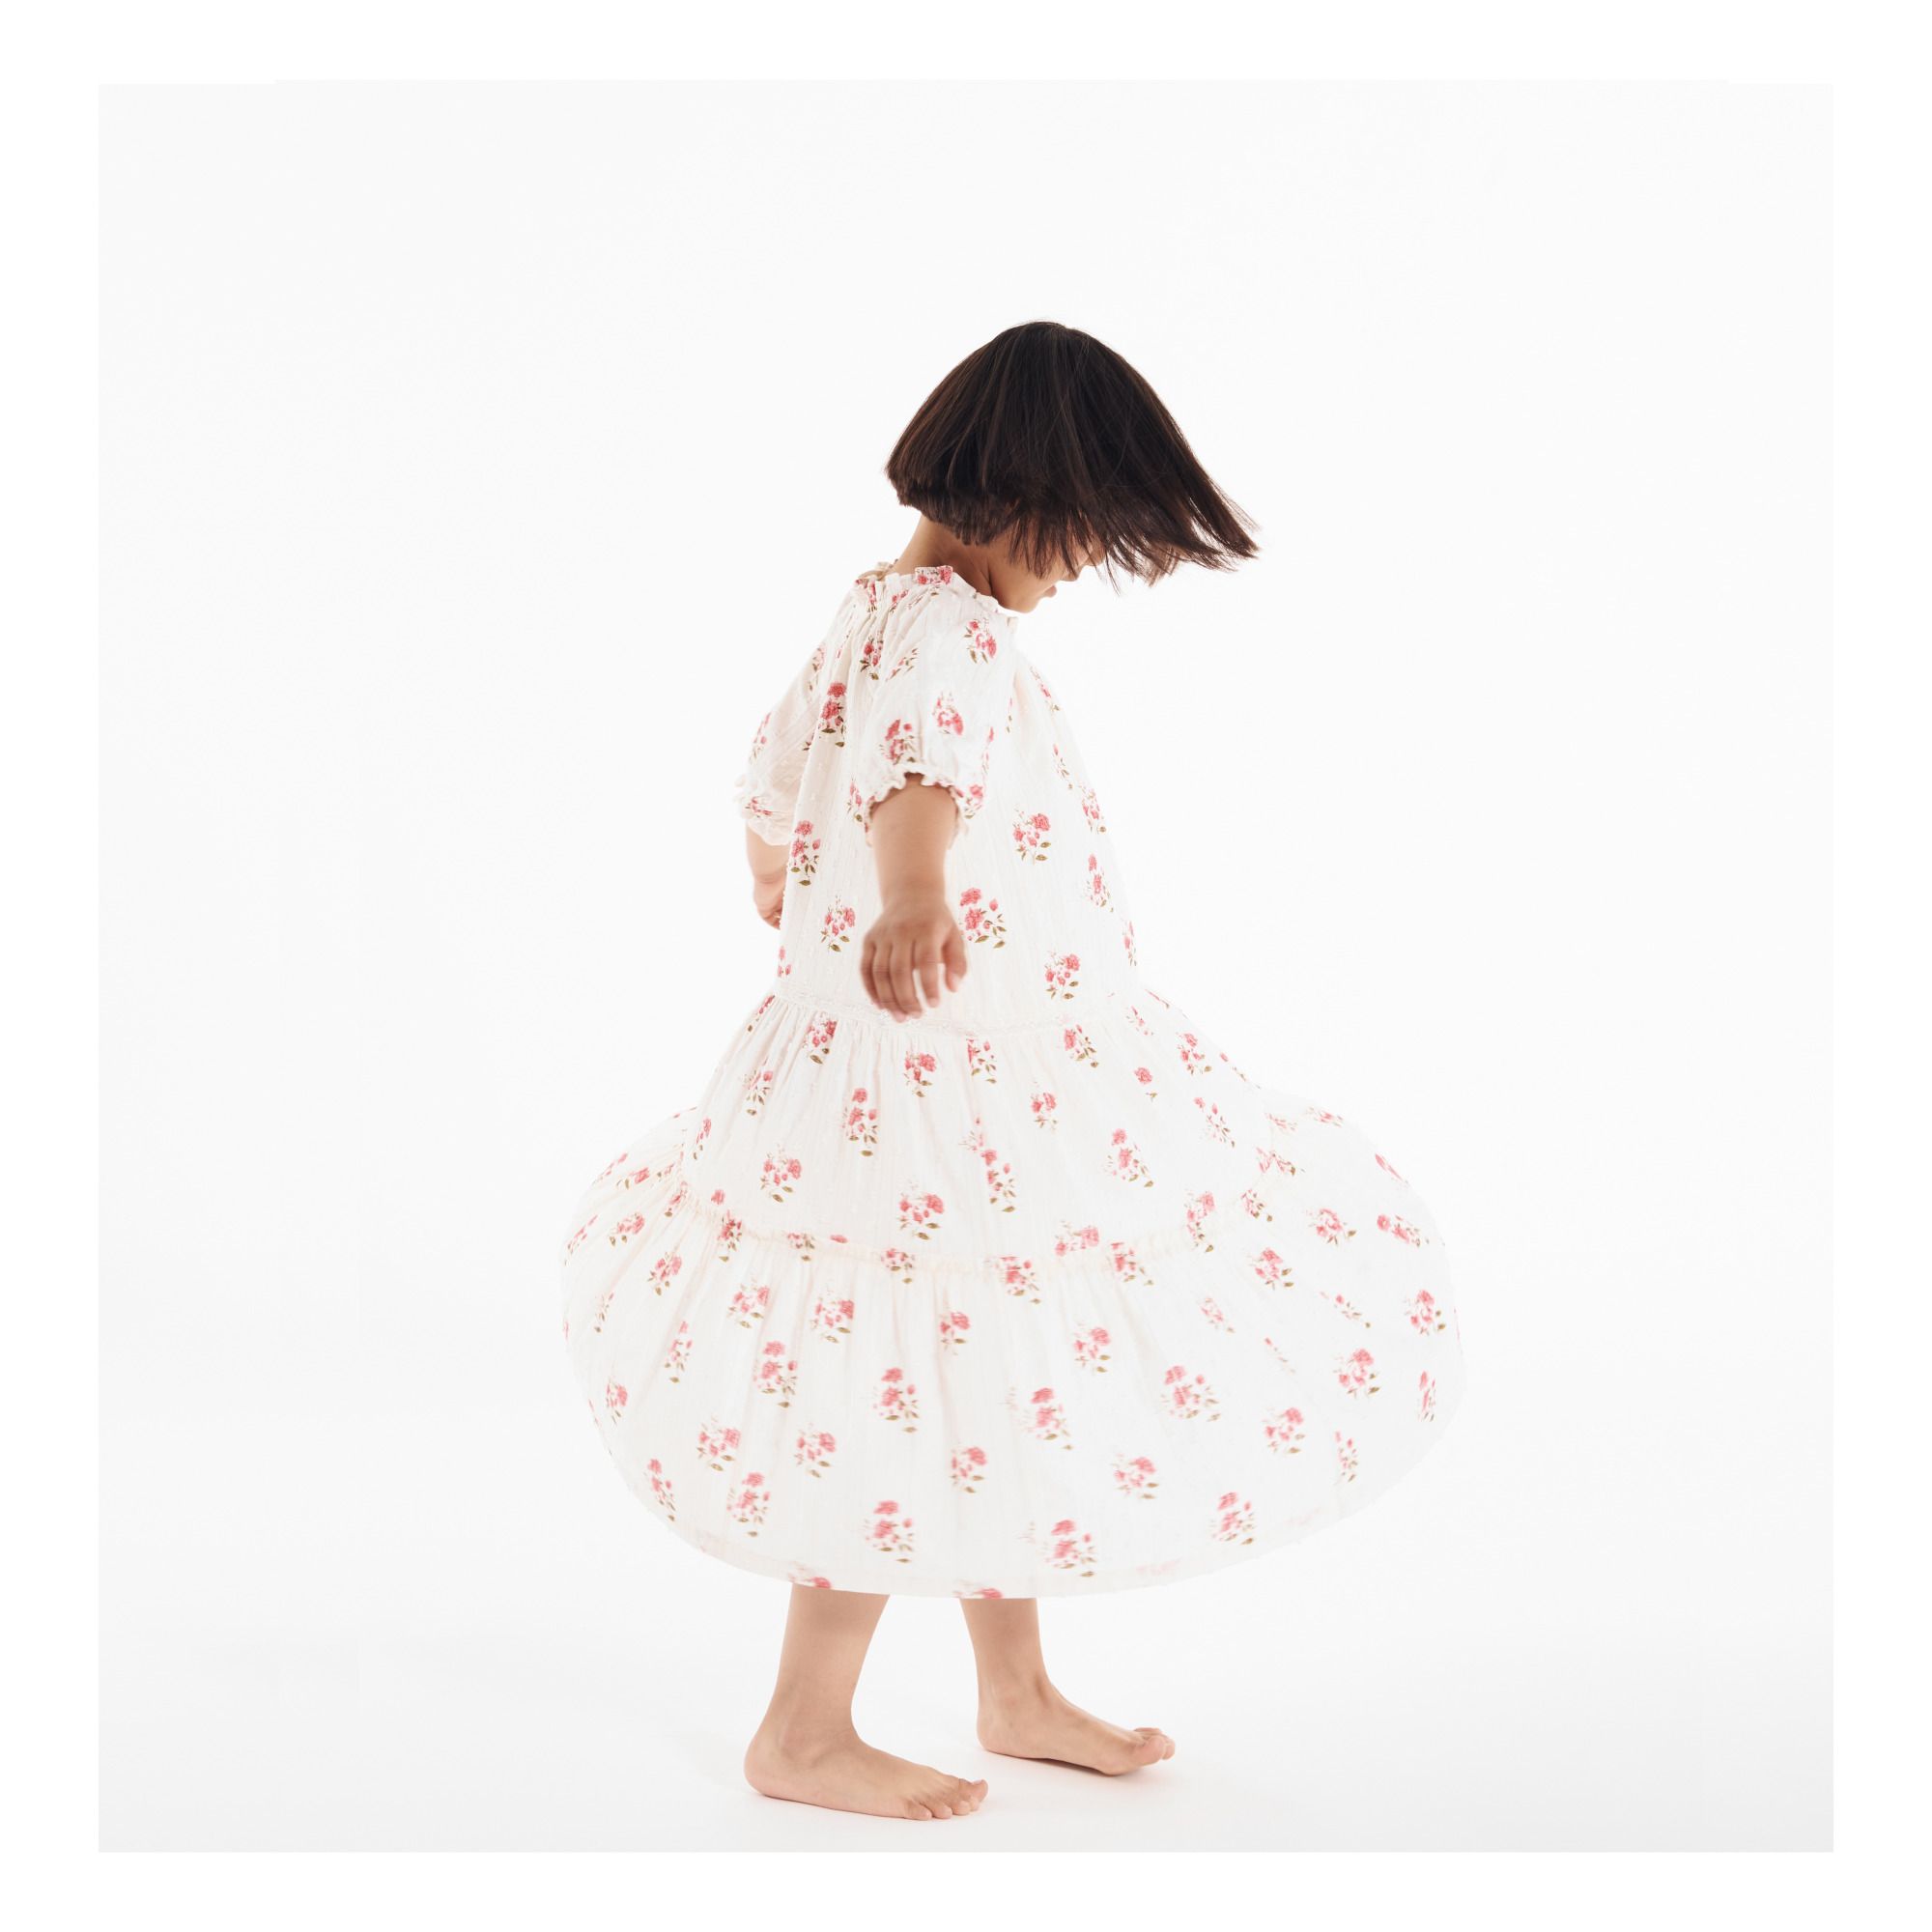 Guyay Toddler Girl Floral Dress Baby Little Girl Short Ruffle Sleeve Dress Flower Print Party Dress MIdi Dress